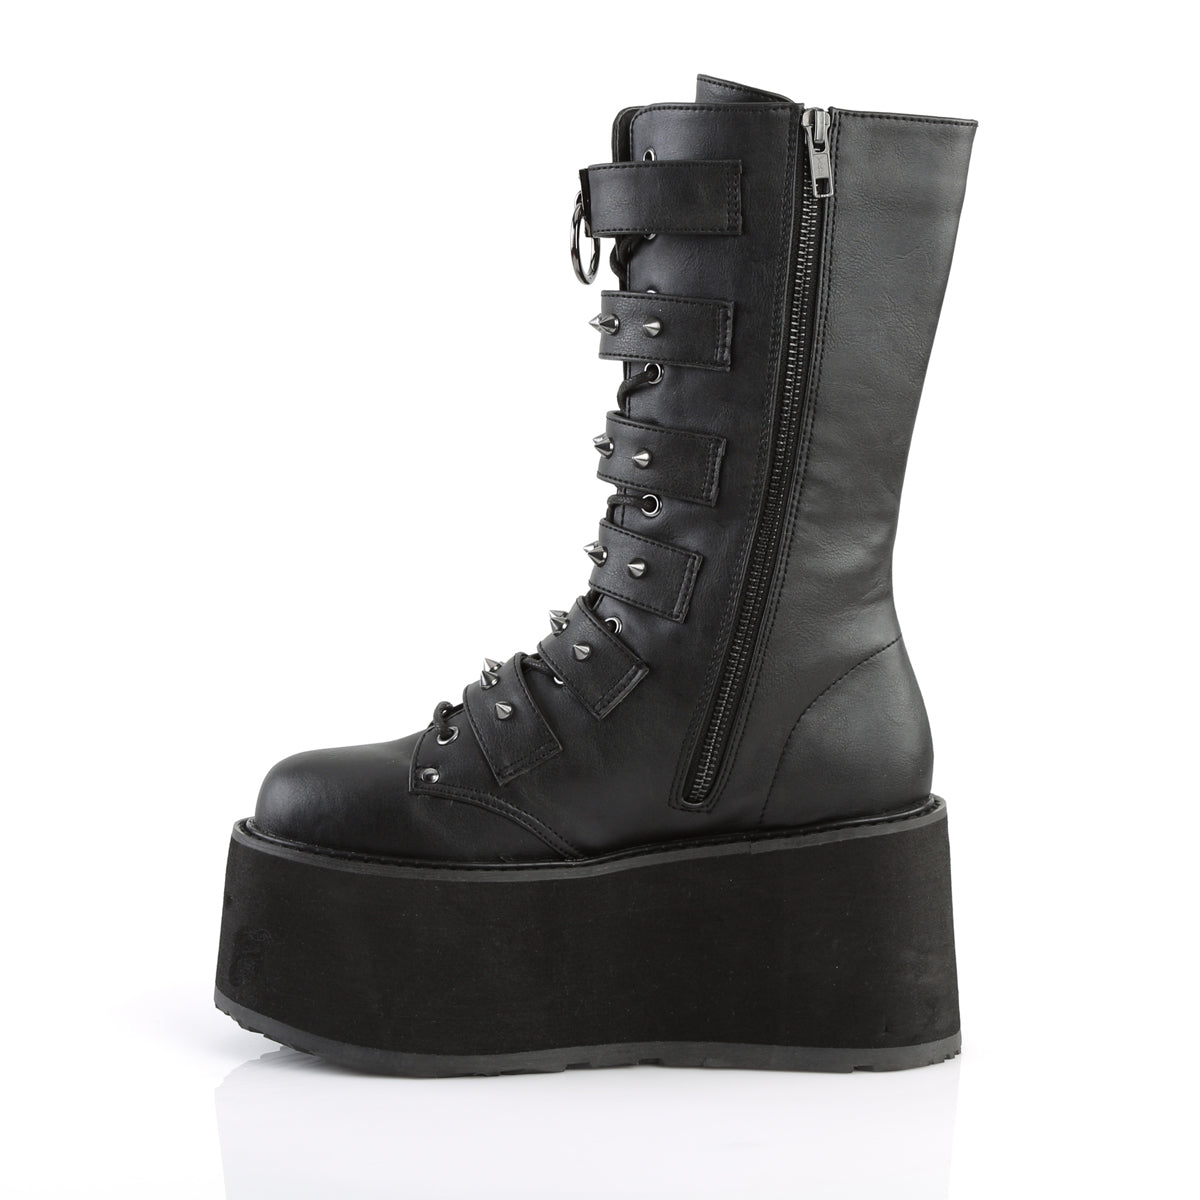 DAMNED-225 Demonia Black Vegan Leather Women's Mid-Calf & Knee High Boots [Demonia Cult Alternative Footwear]